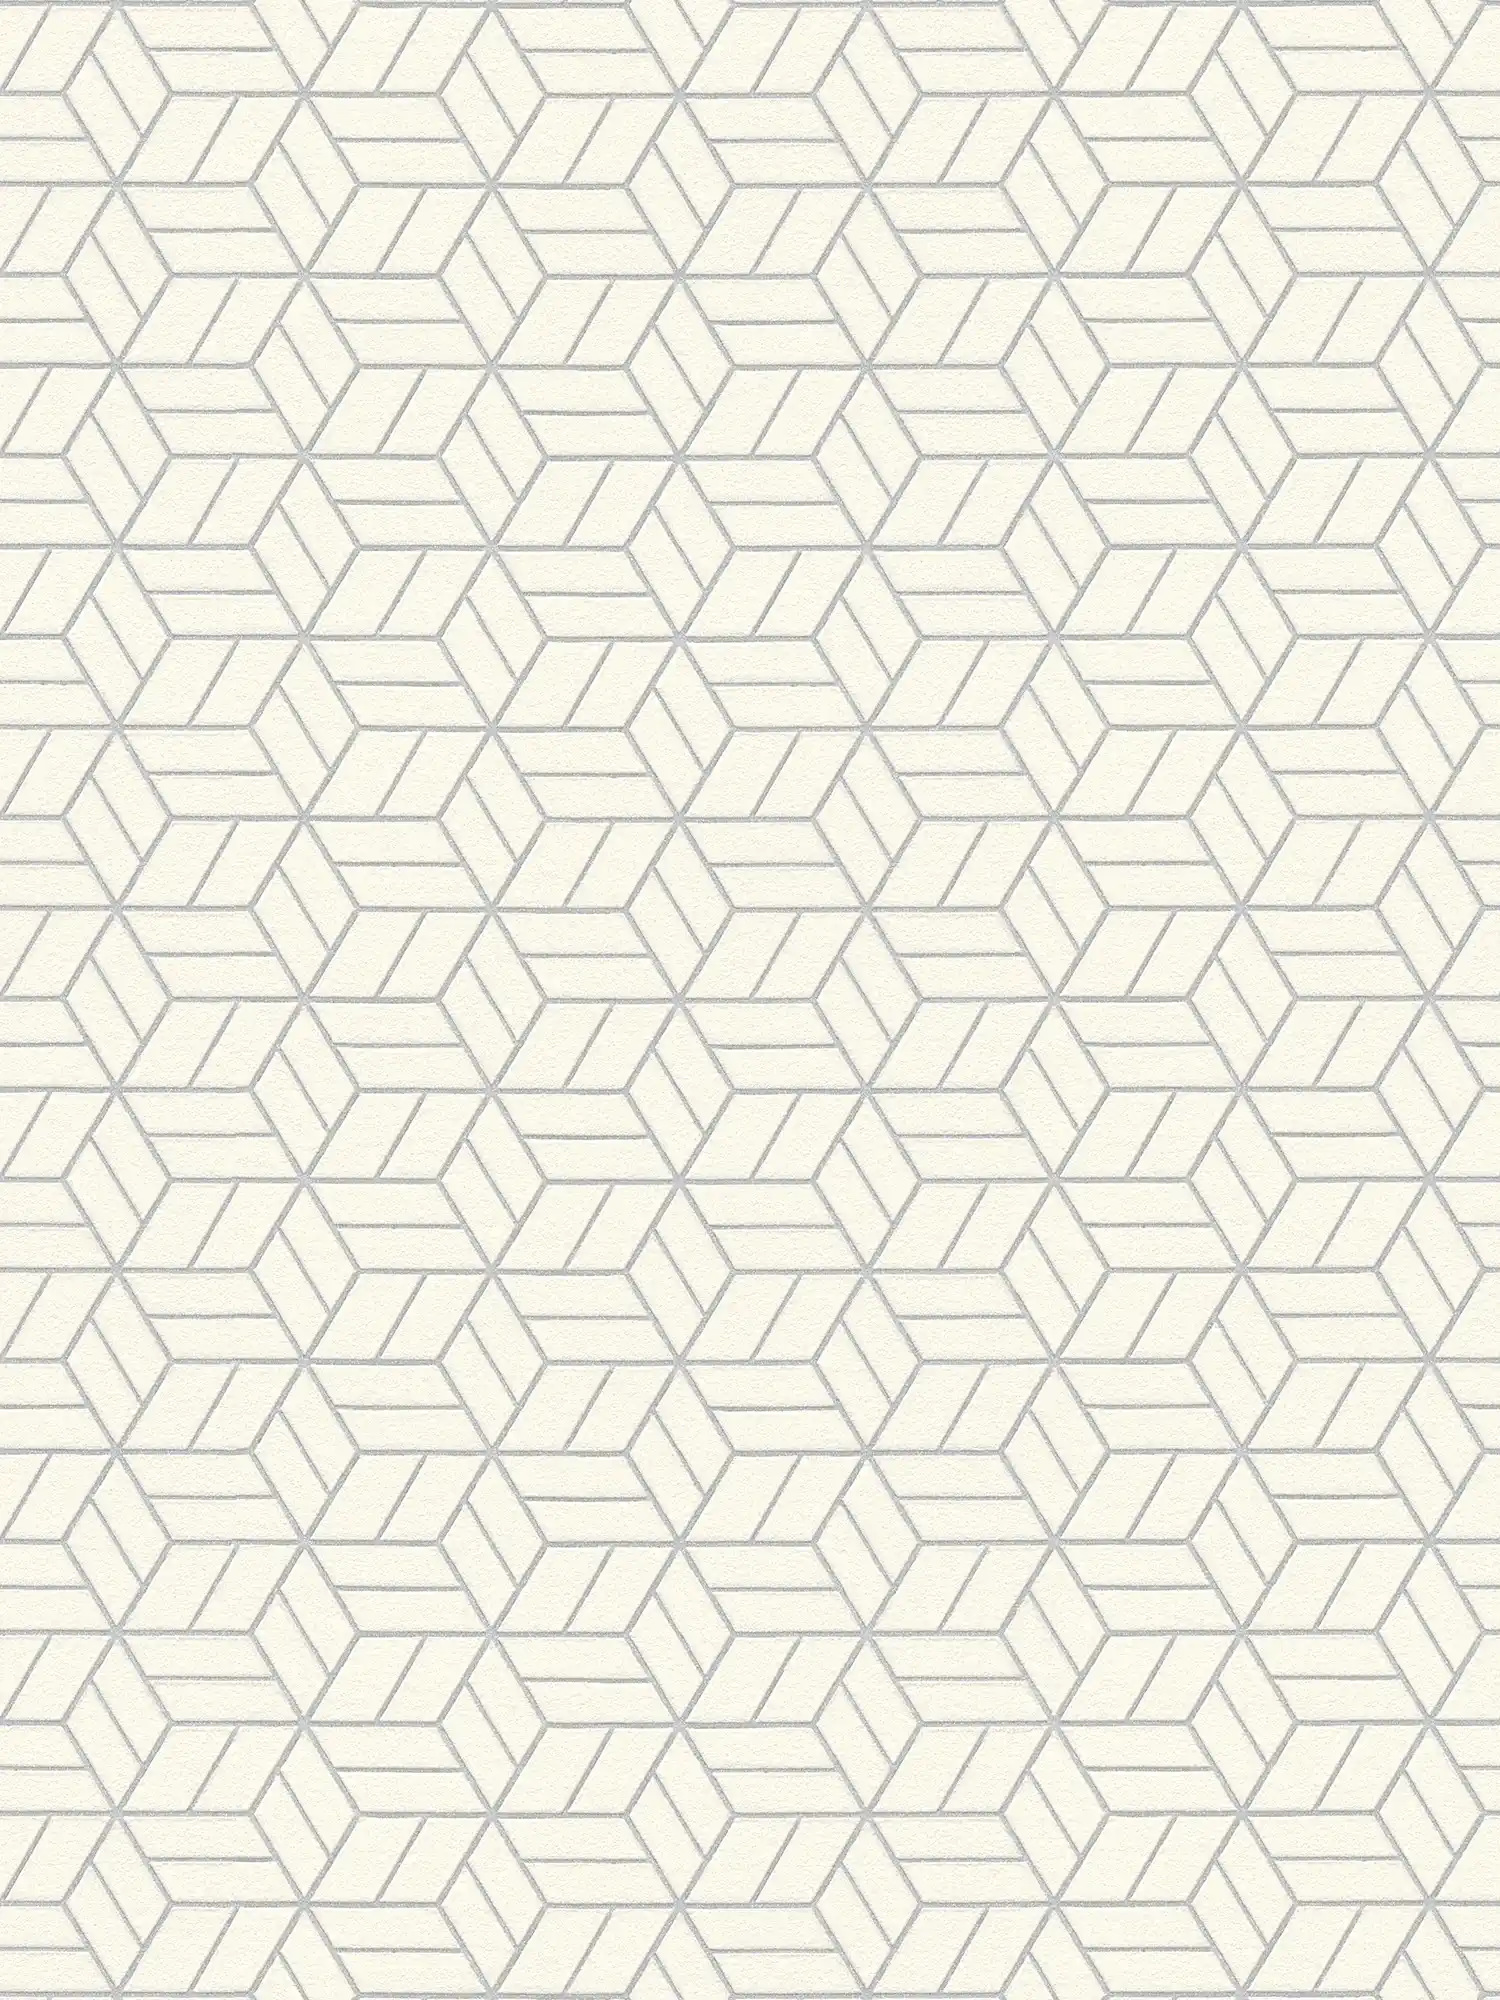 Wallpaper geometric pattern & glitter effect - silver, grey, white
